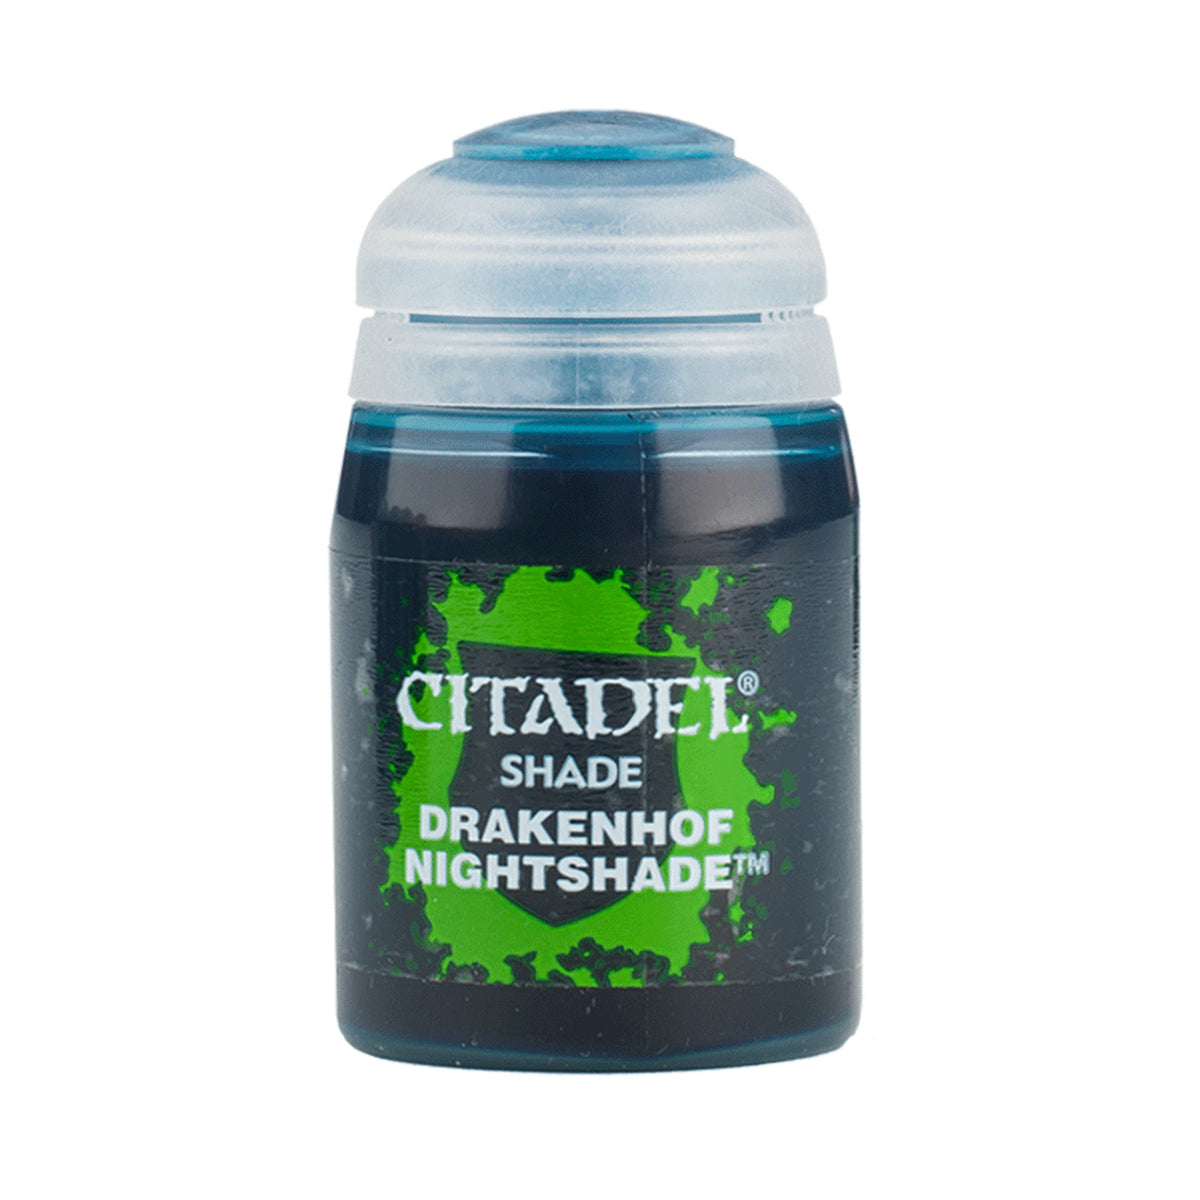 Drakenhof Nightshade - Citadel Shade